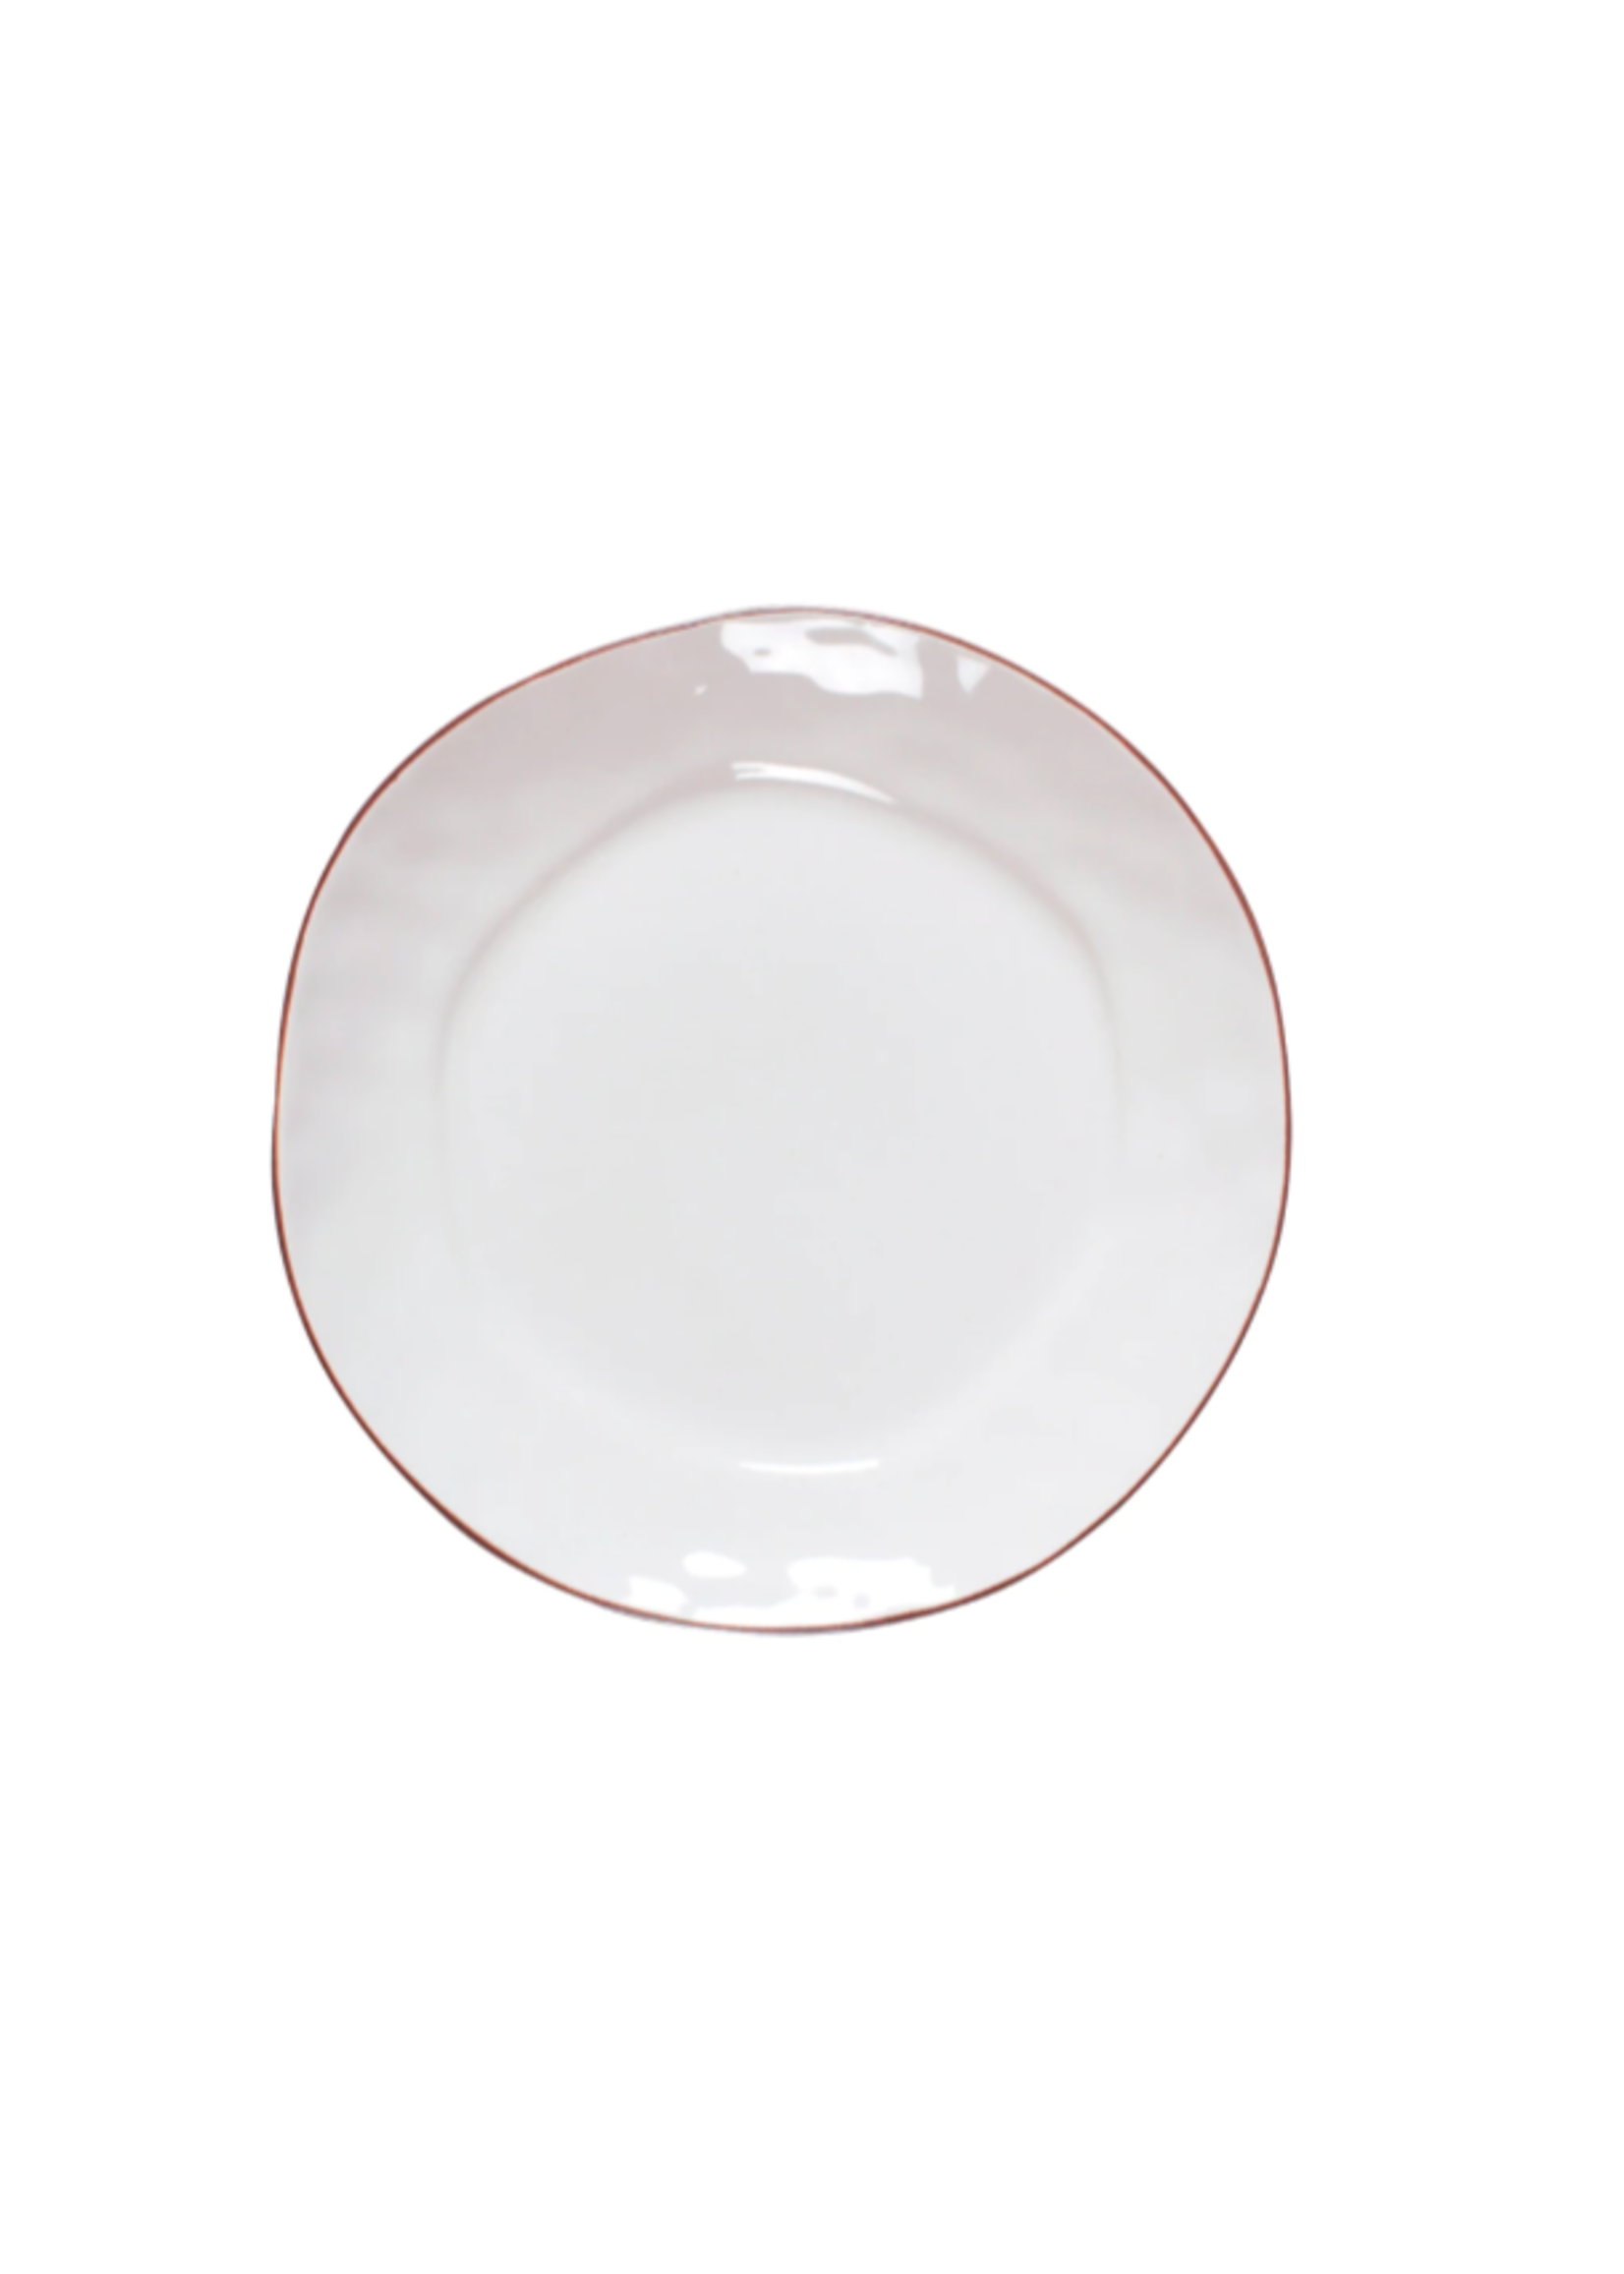 Skyros Designs Cantaria Bread Plate White